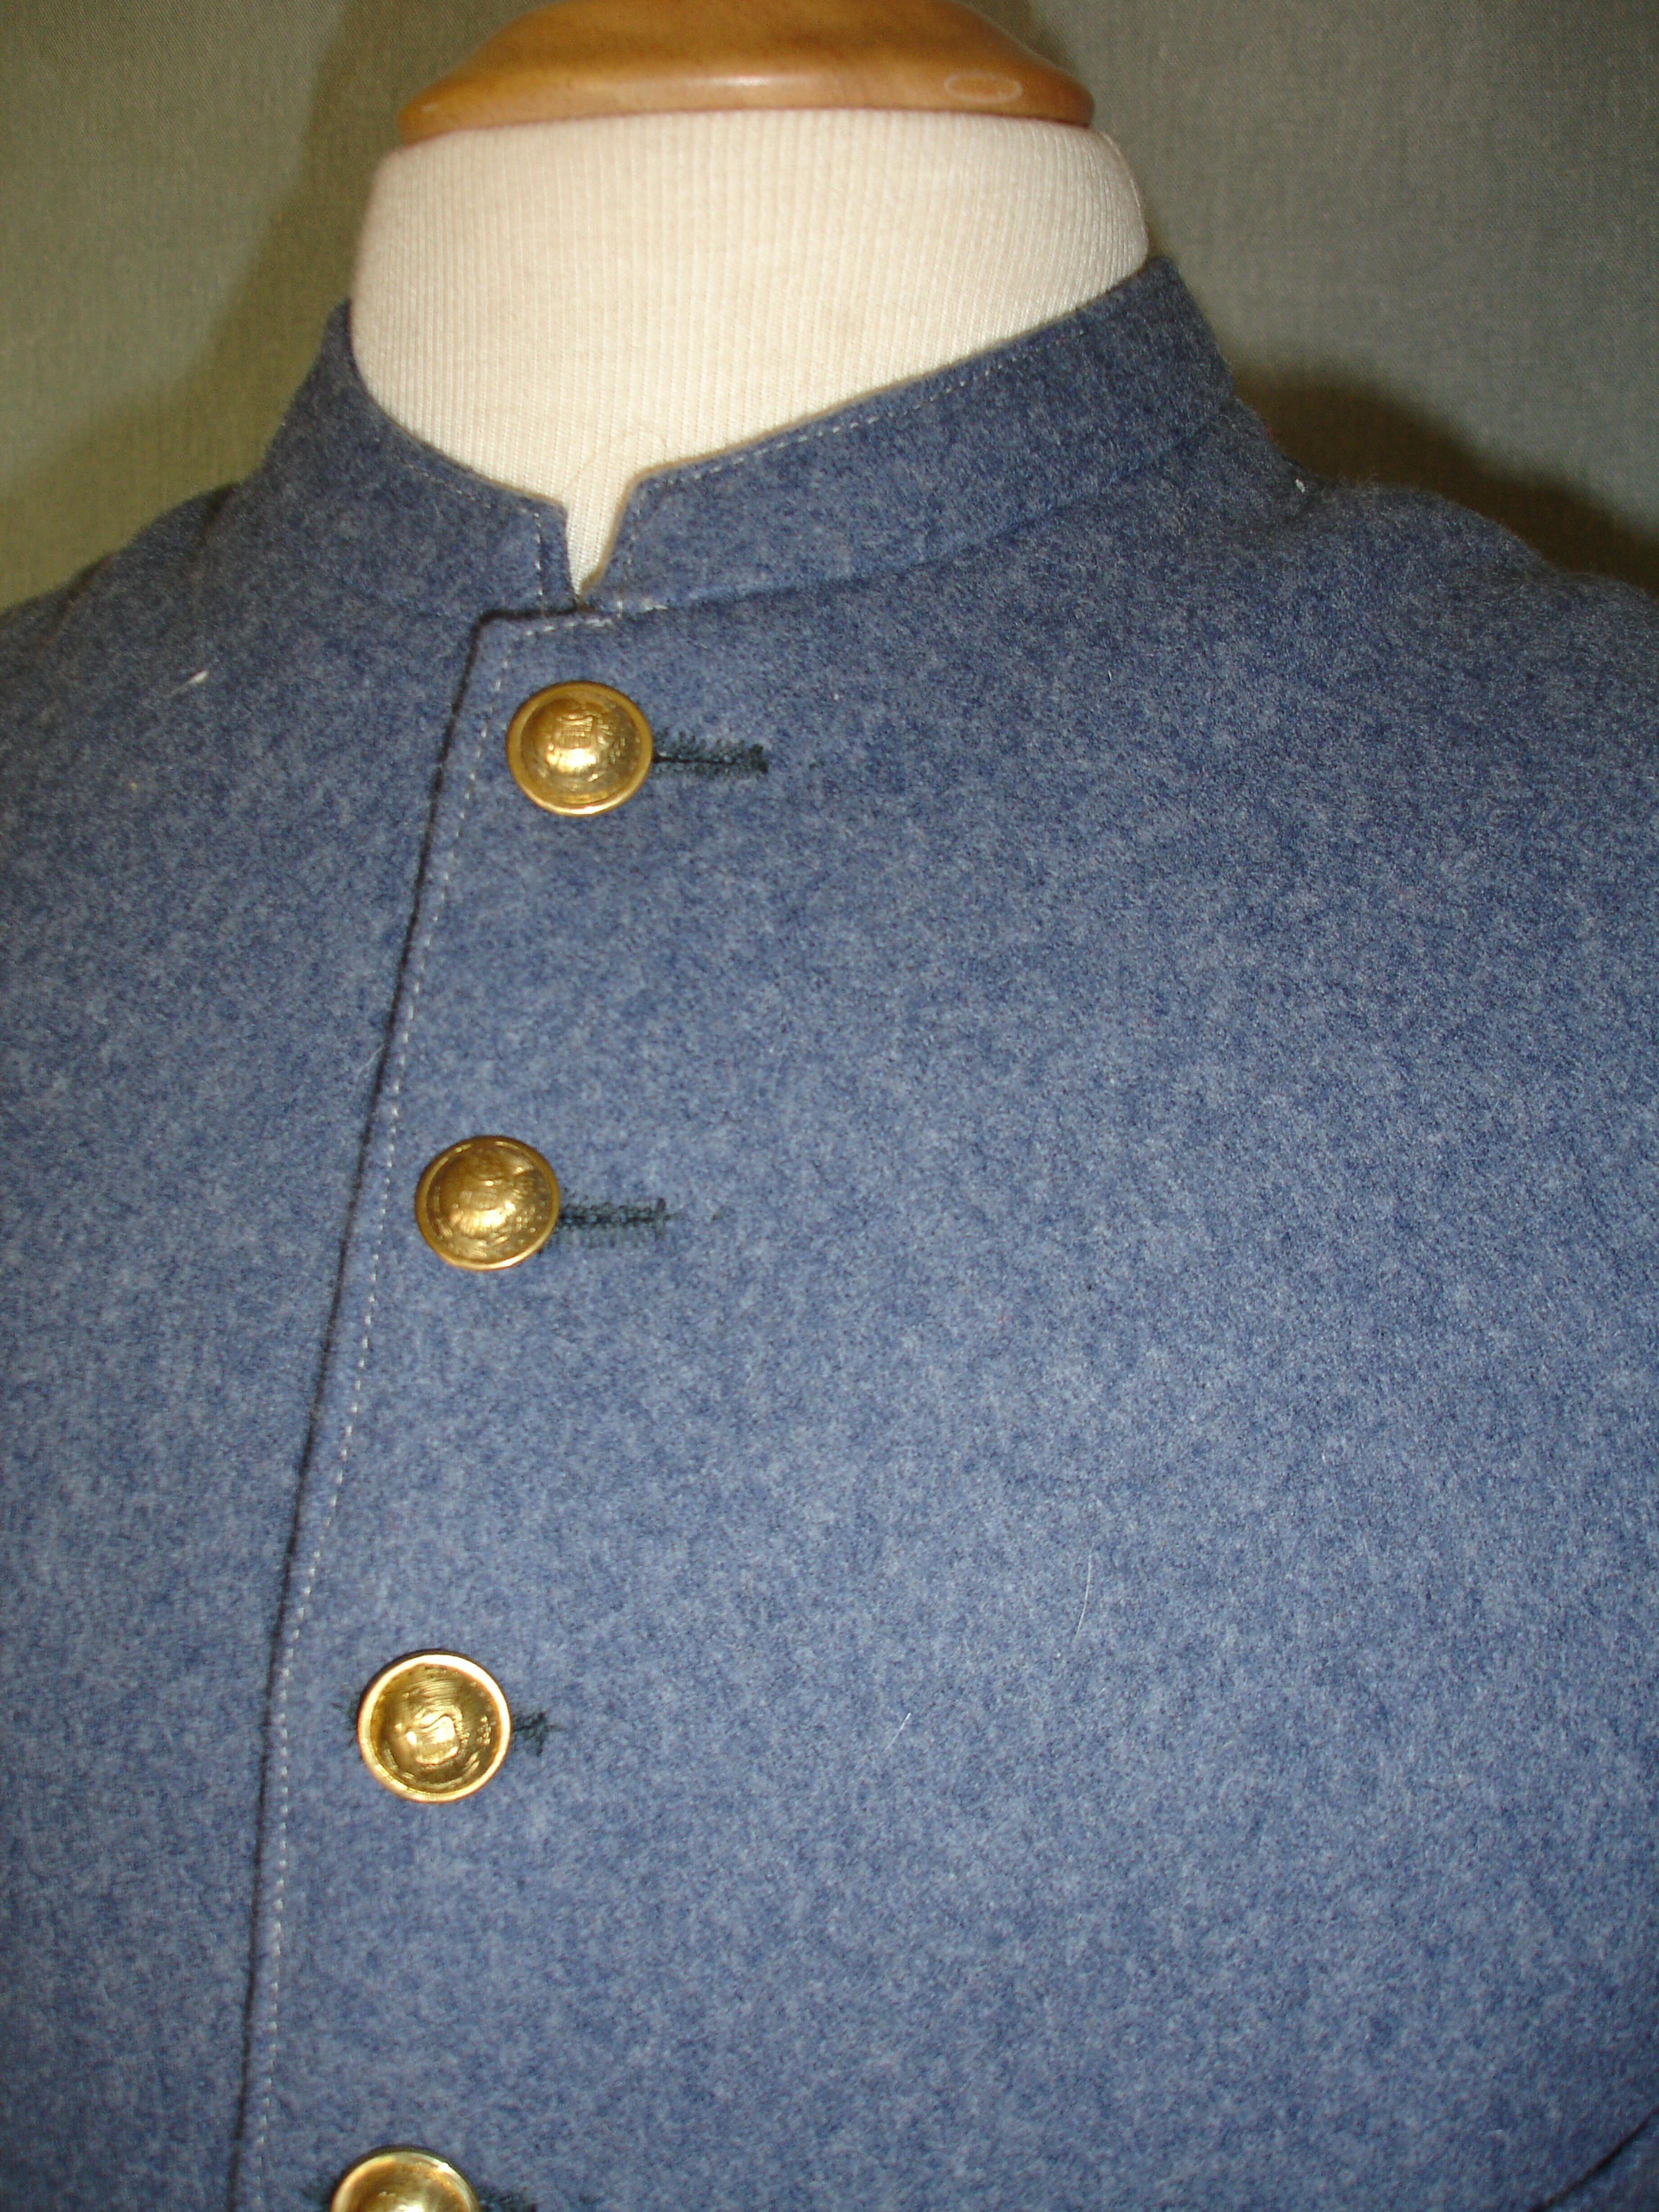 Military Vest